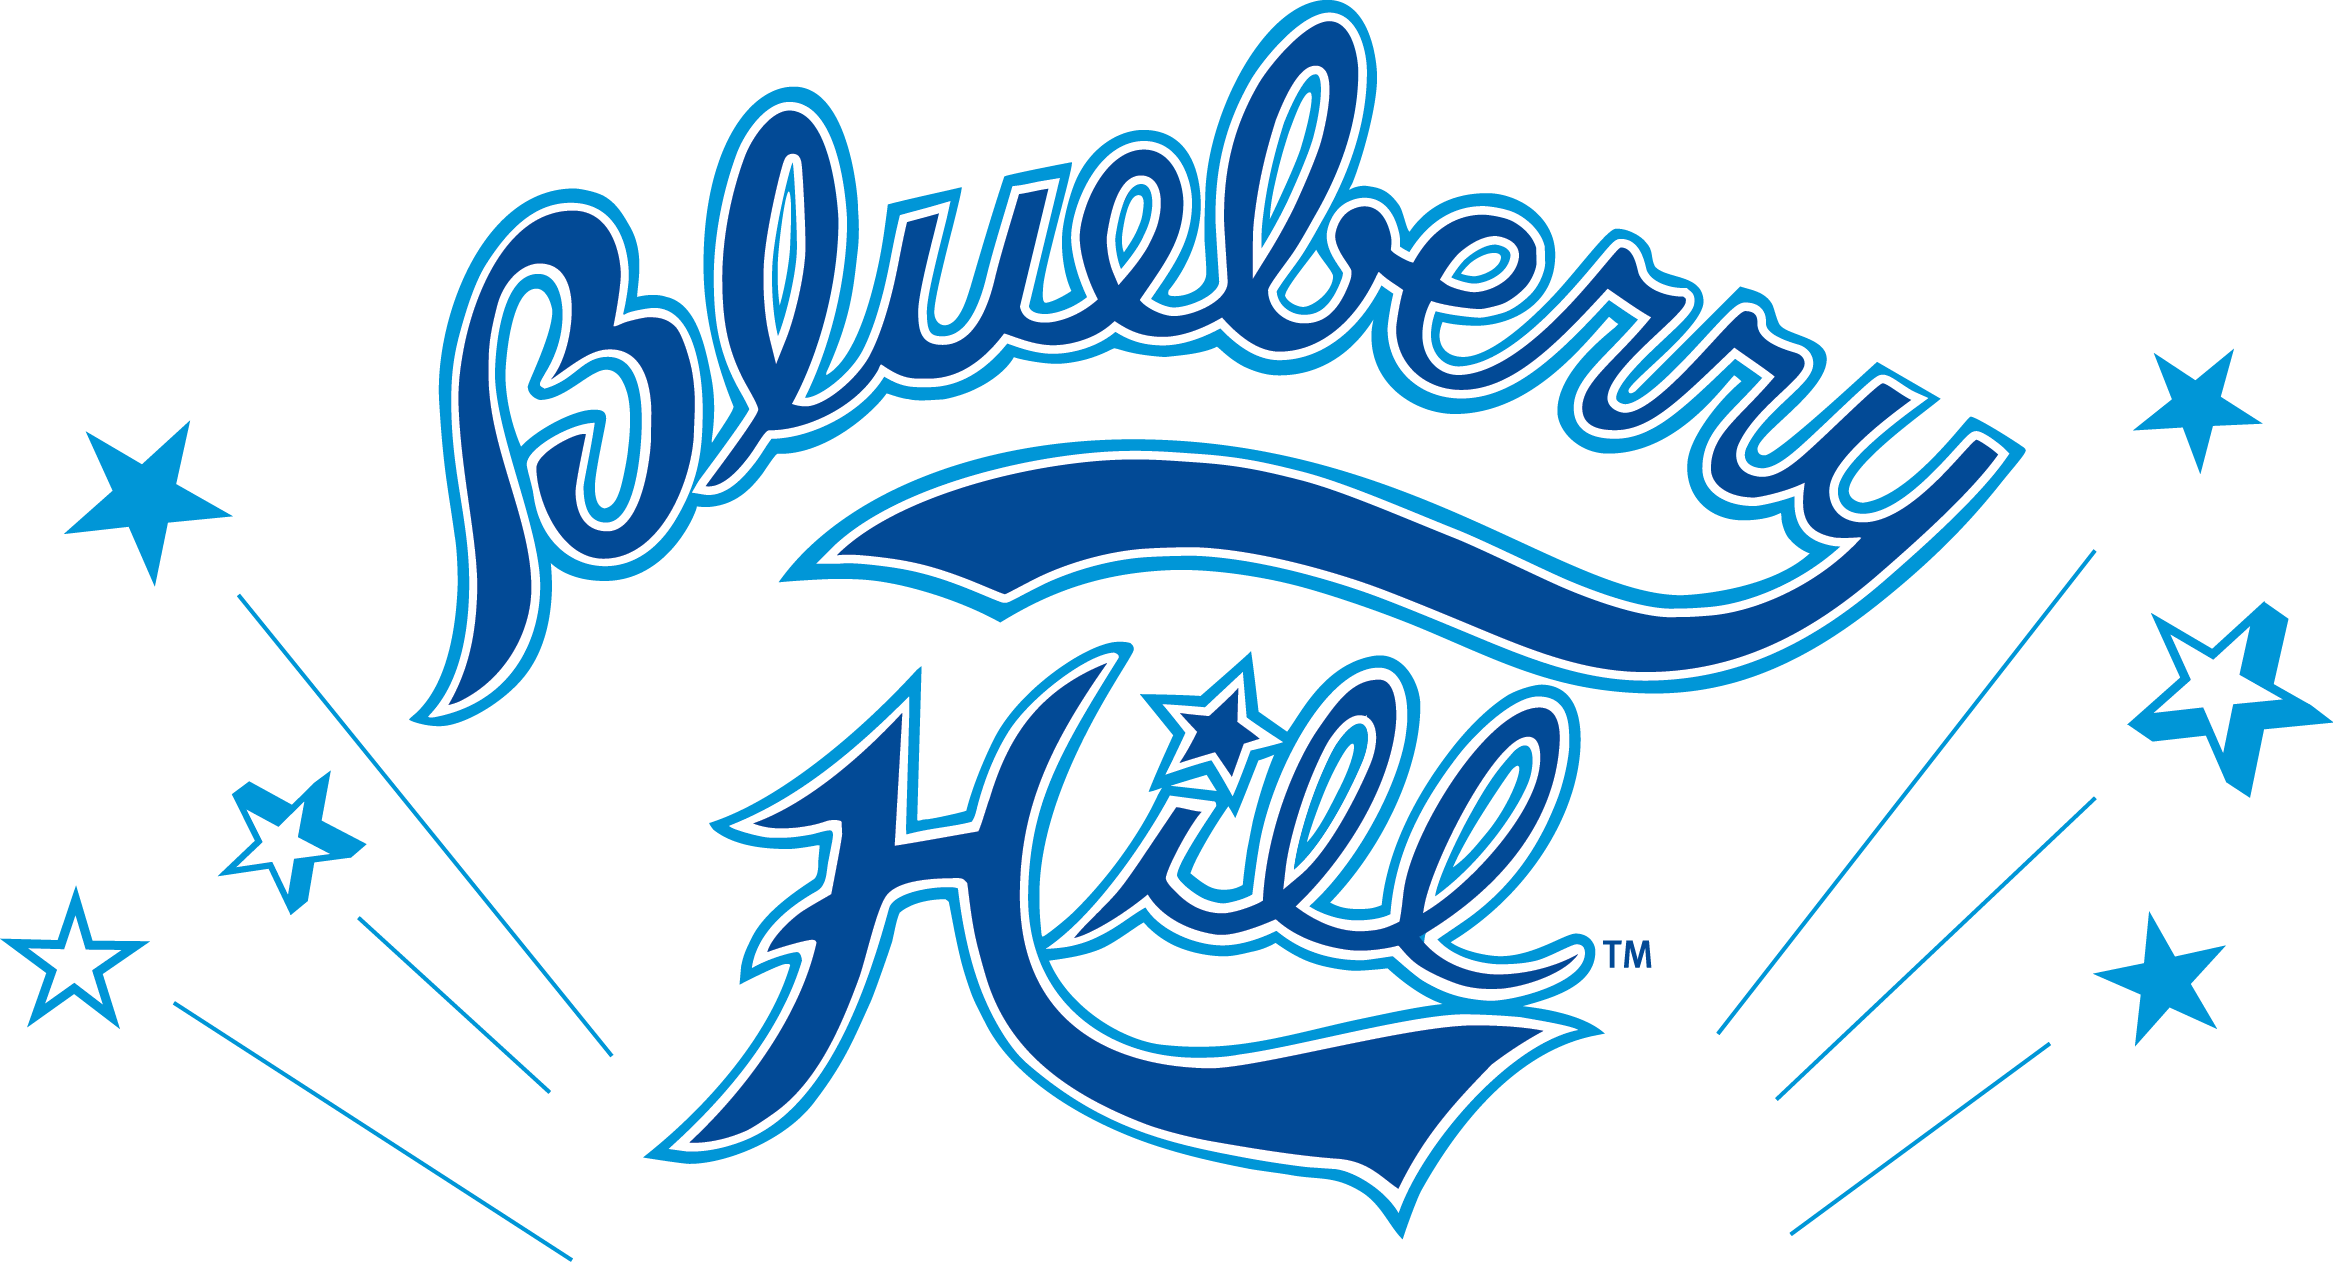 blueberry-hill-logo-11